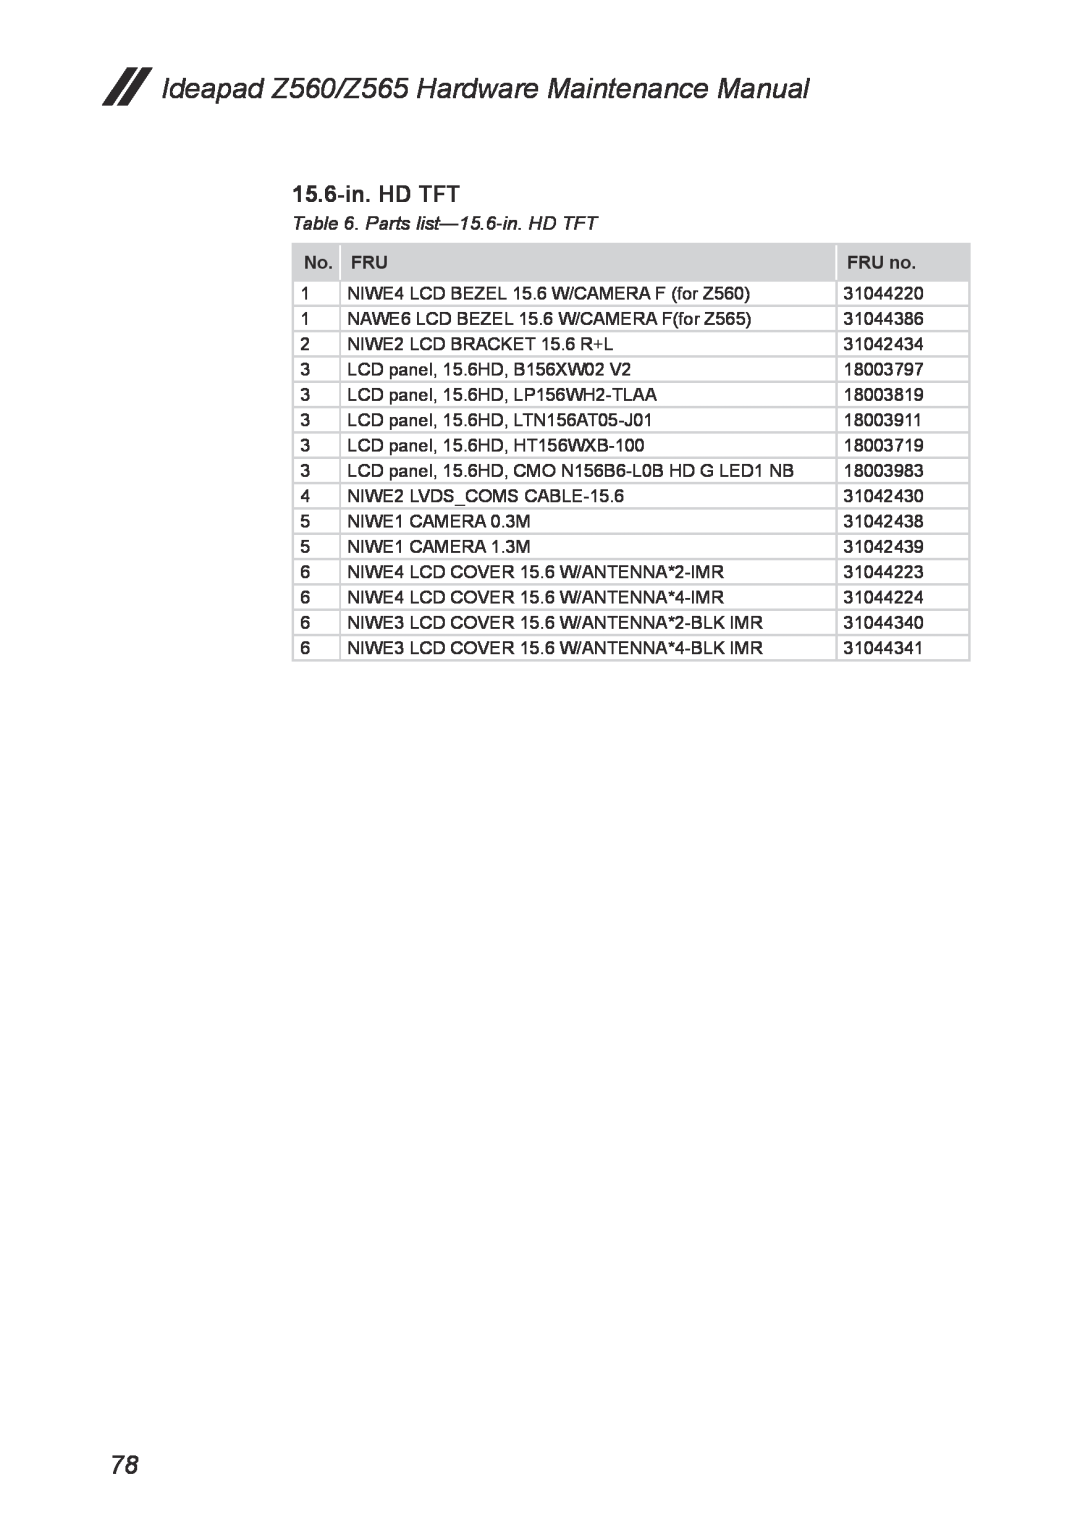 Lenovo manual Parts list-15.6-in. HD TFT, Ideapad Z560/Z565 Hardware Maintenance Manual 